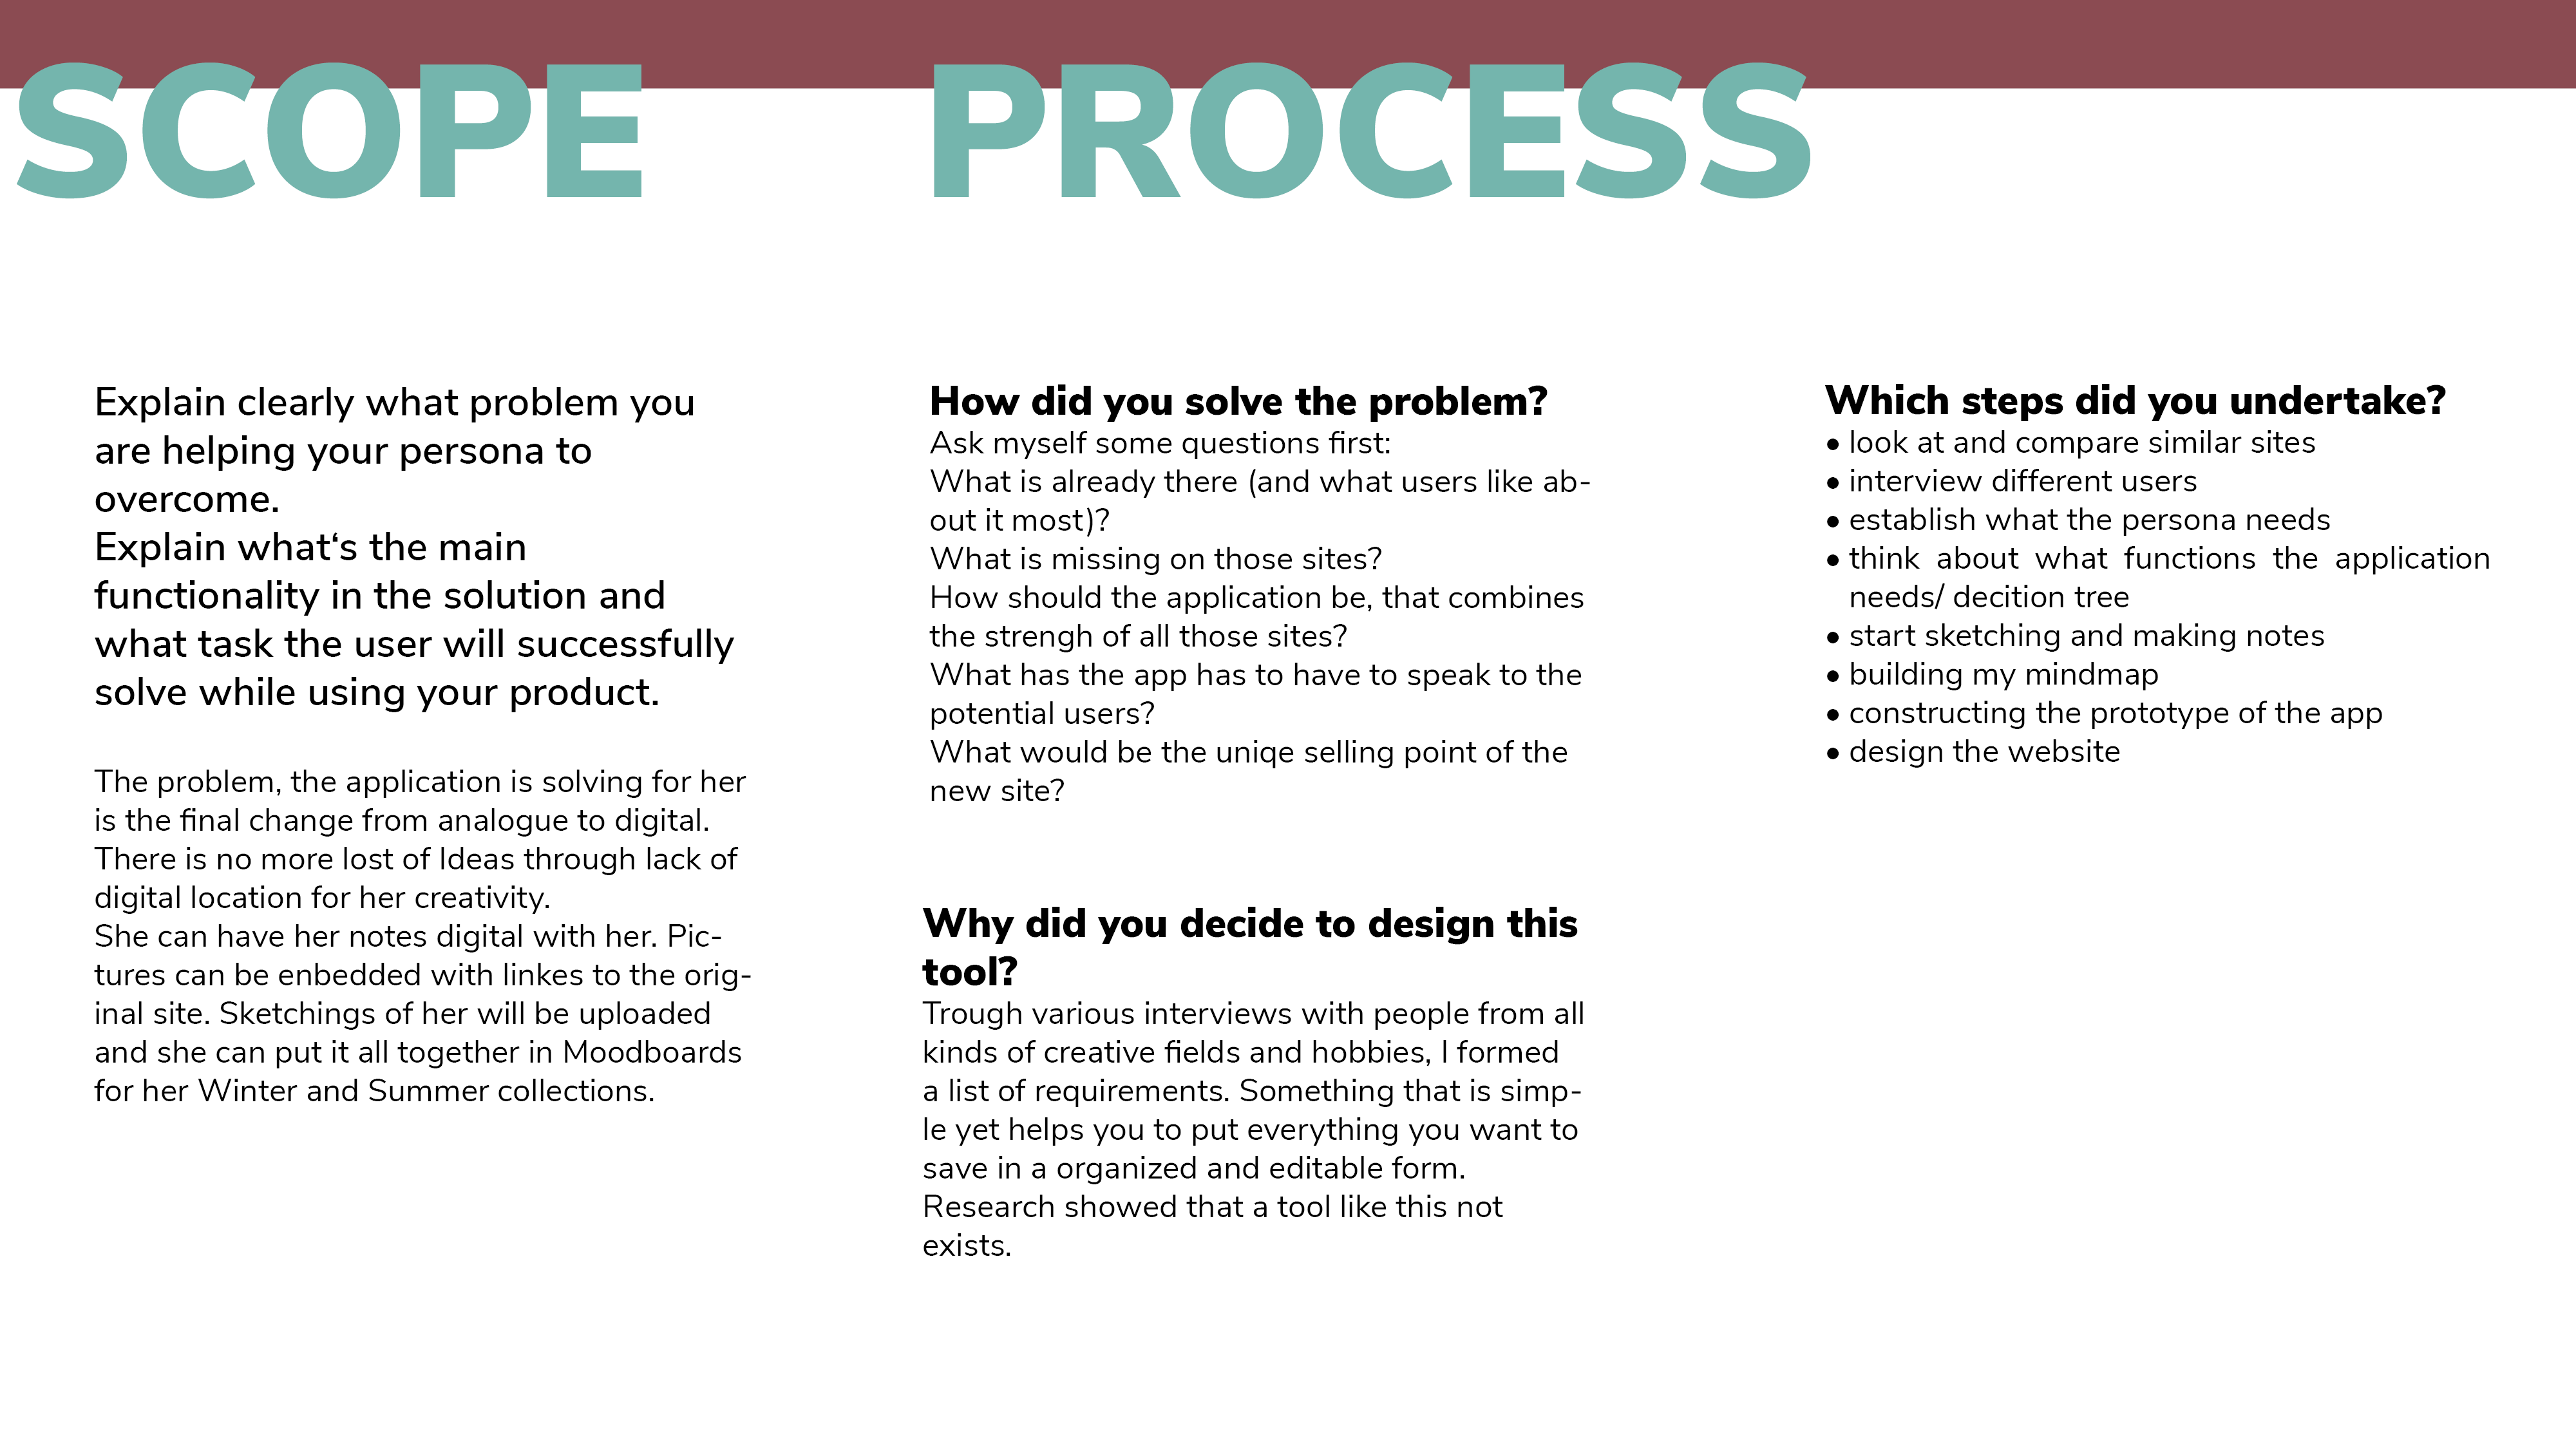 Scope & Process